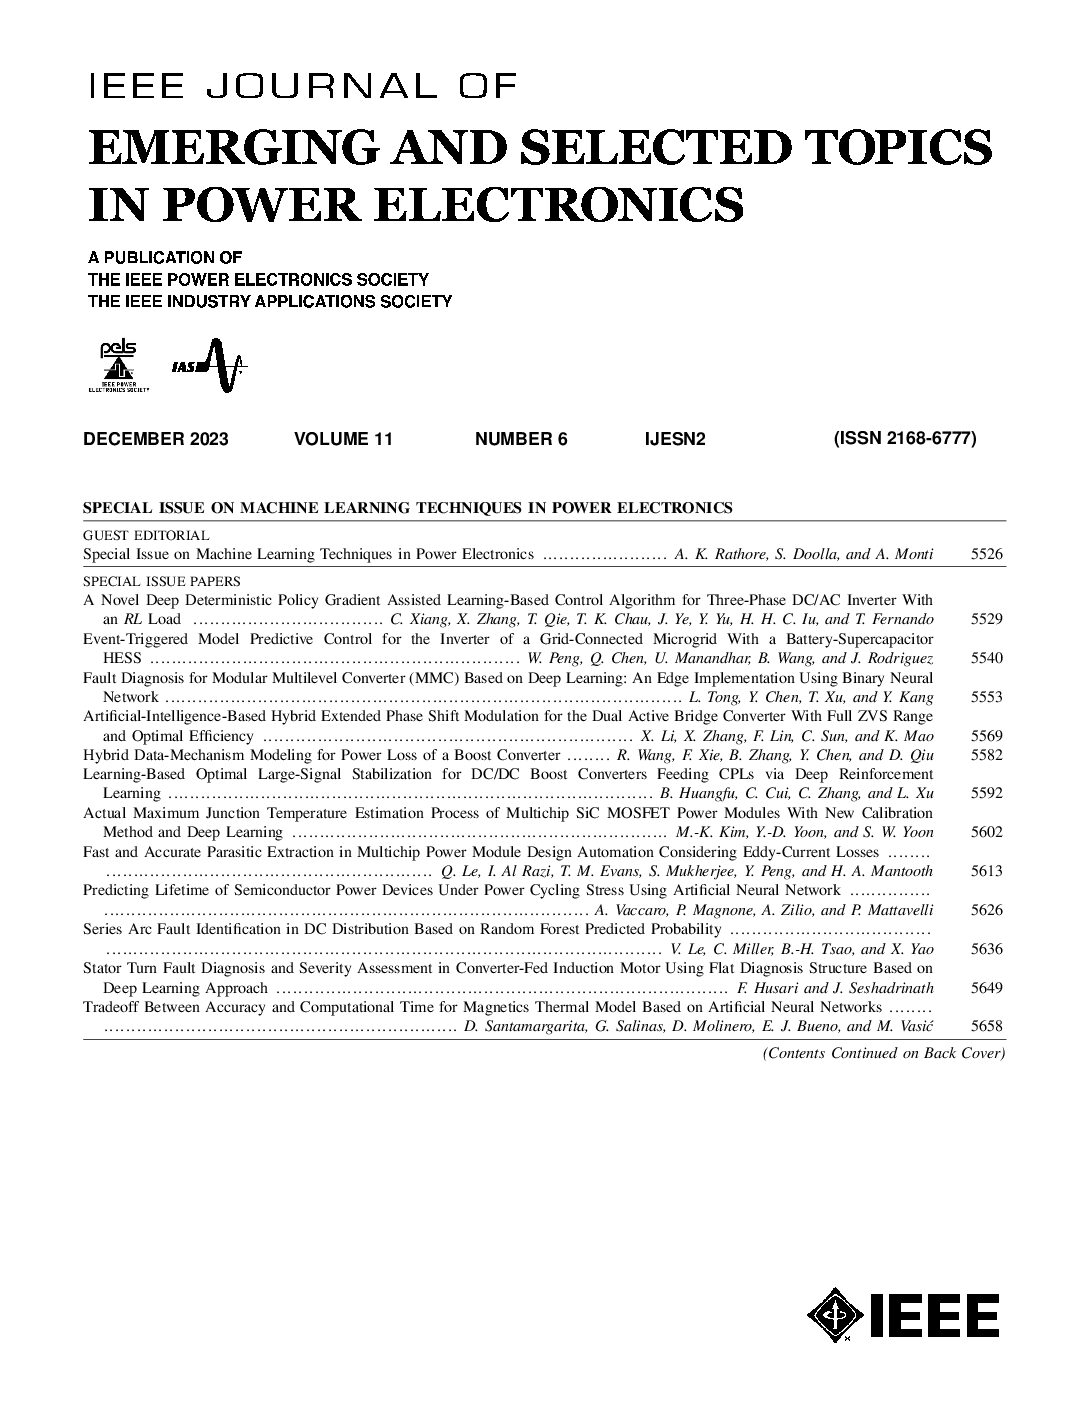 IEEE J. Emerging Sel. Top. Power Electron.